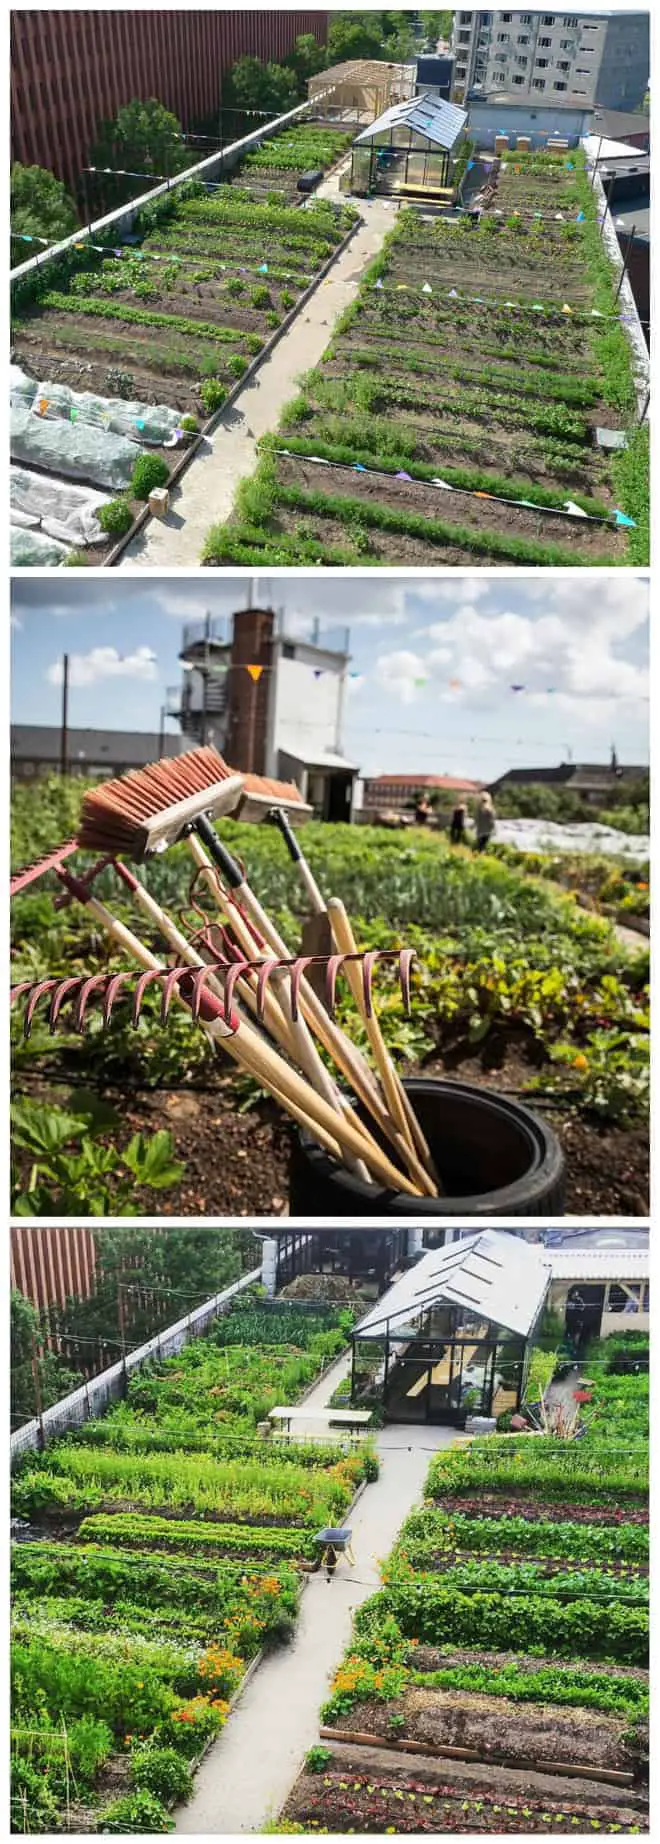 Oestergro, A Urban Farm Landscape Made In Denmark 15 - Landscape & Backyard Ideas